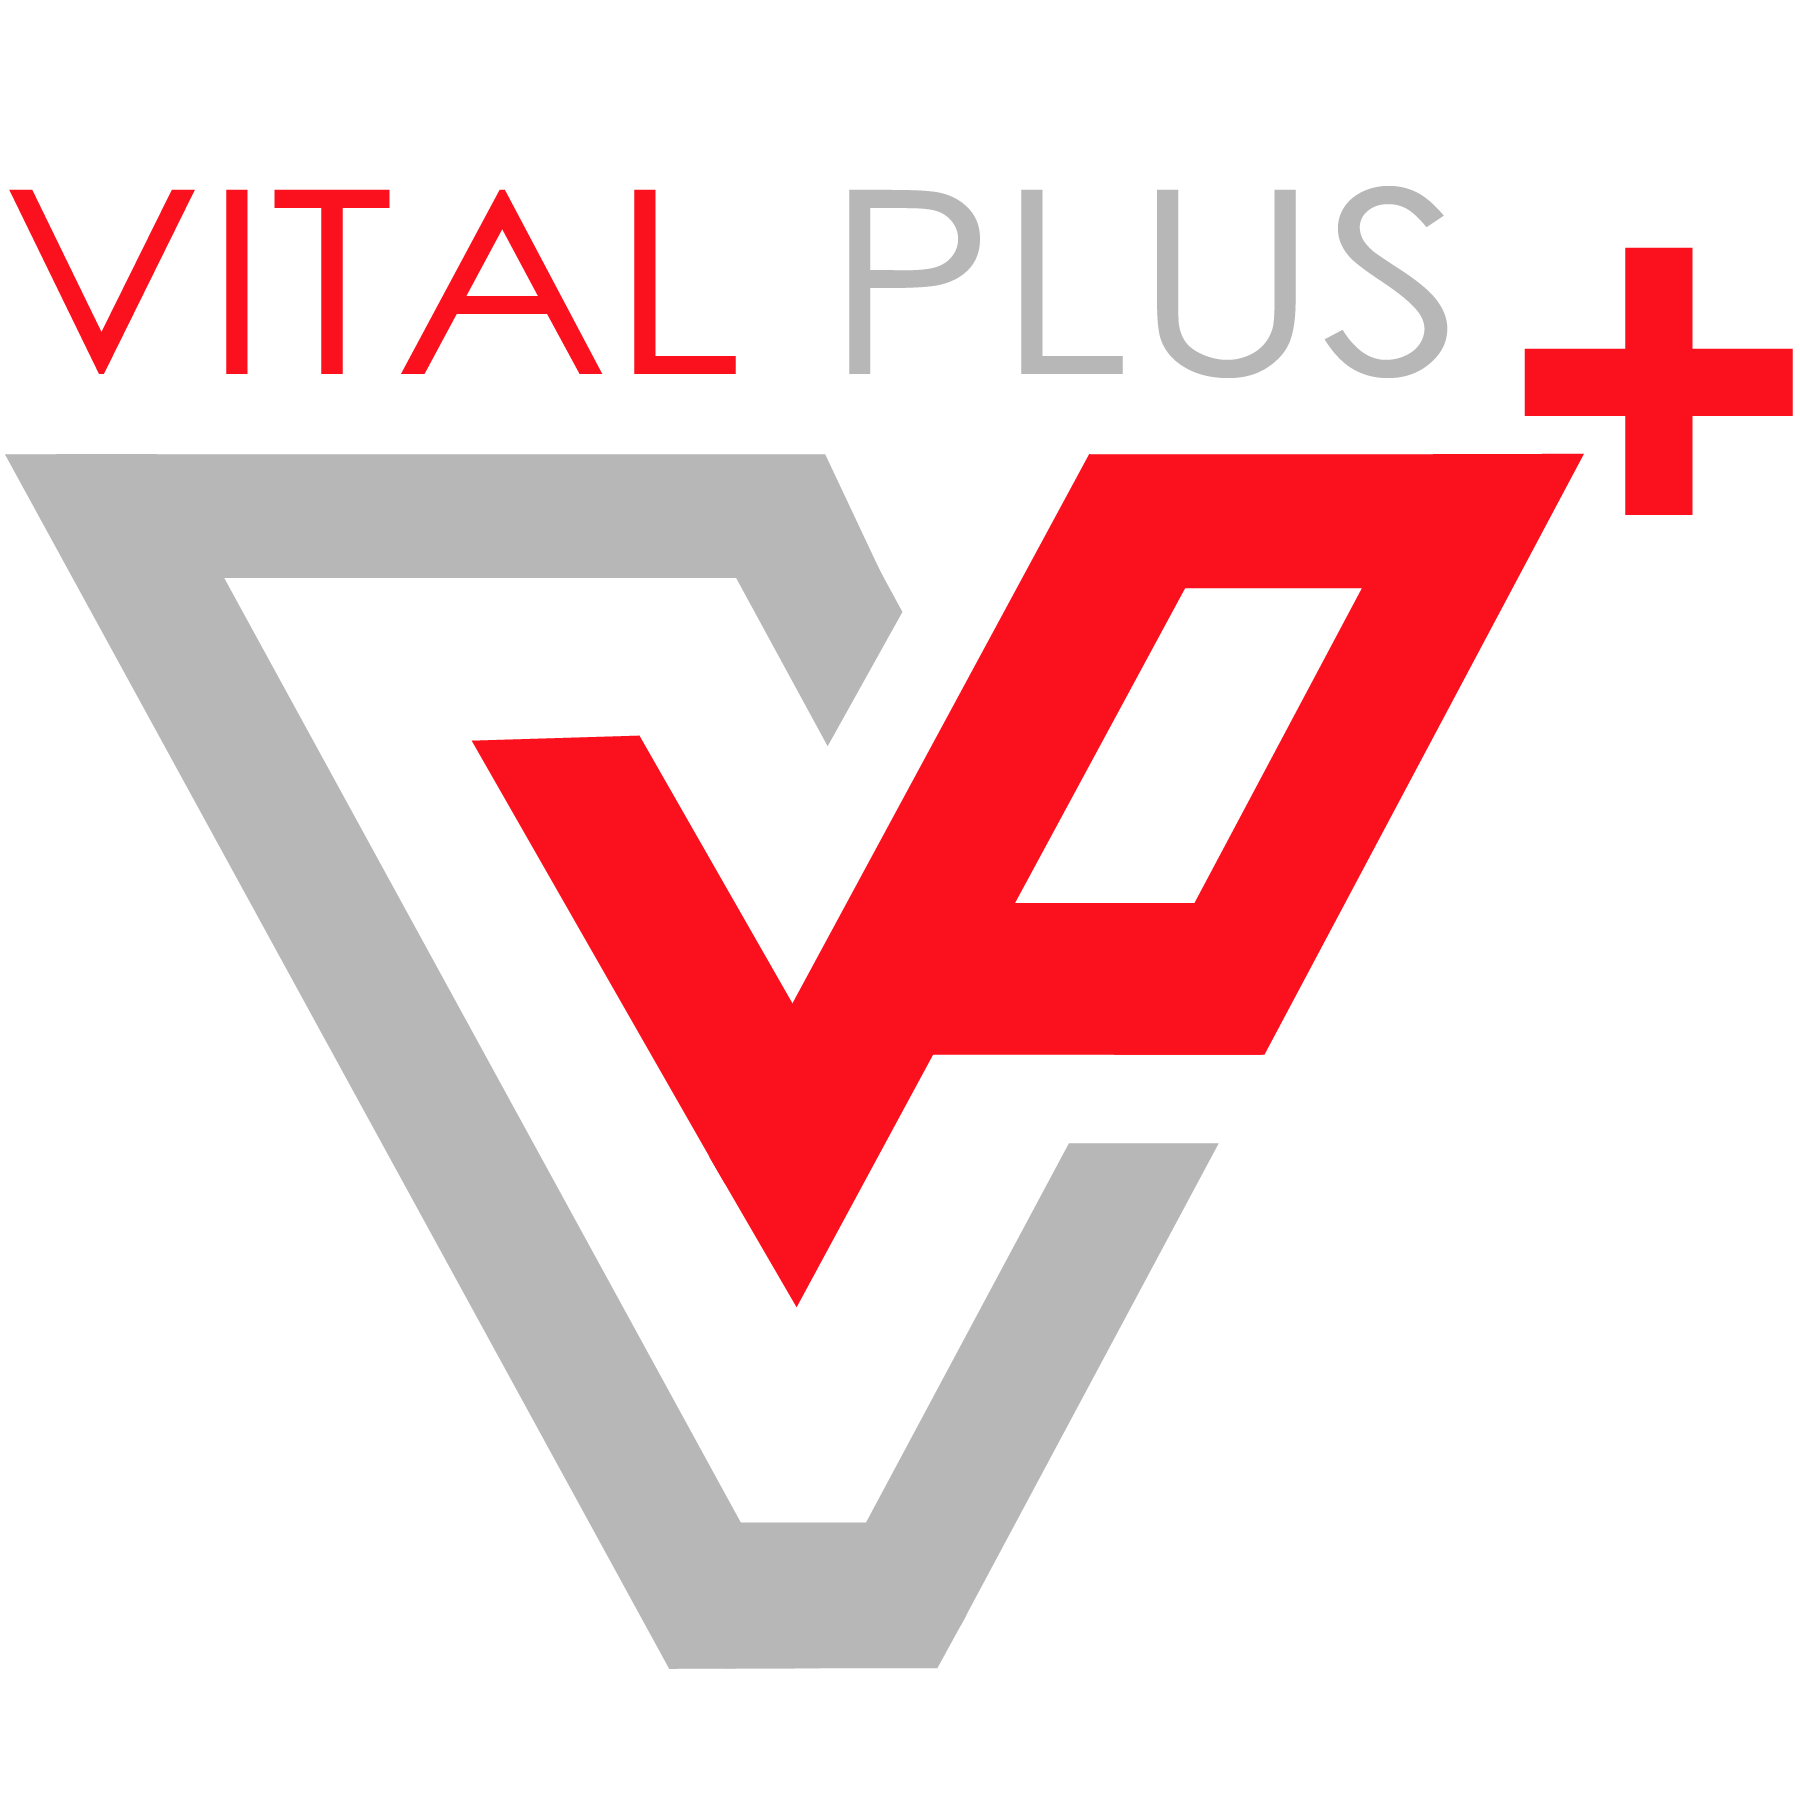 Vital Plus Pharmacy - Paterson, NJ 07505 - (862)267-0385 | ShowMeLocal.com